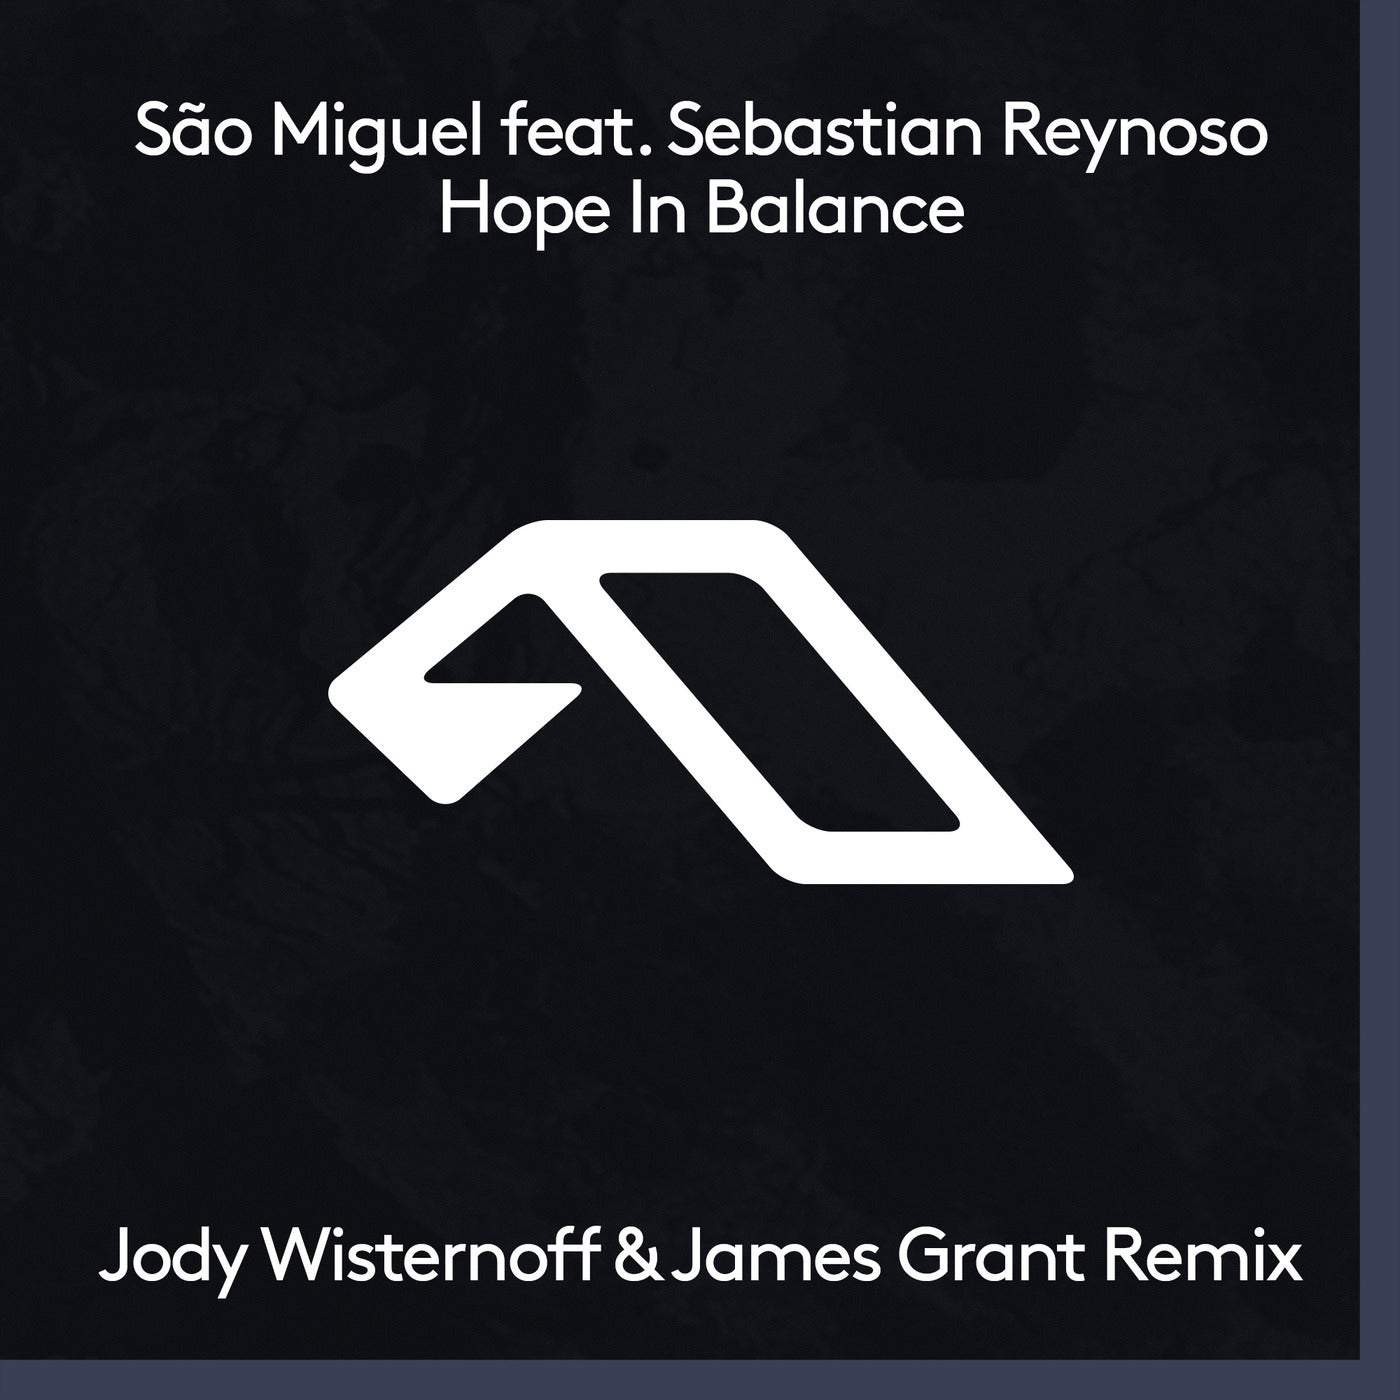 Download Sebastian Reynoso, São Miguel - Hope In Balance (Jody Wisternoff & James Grant Remix) on Electrobuzz